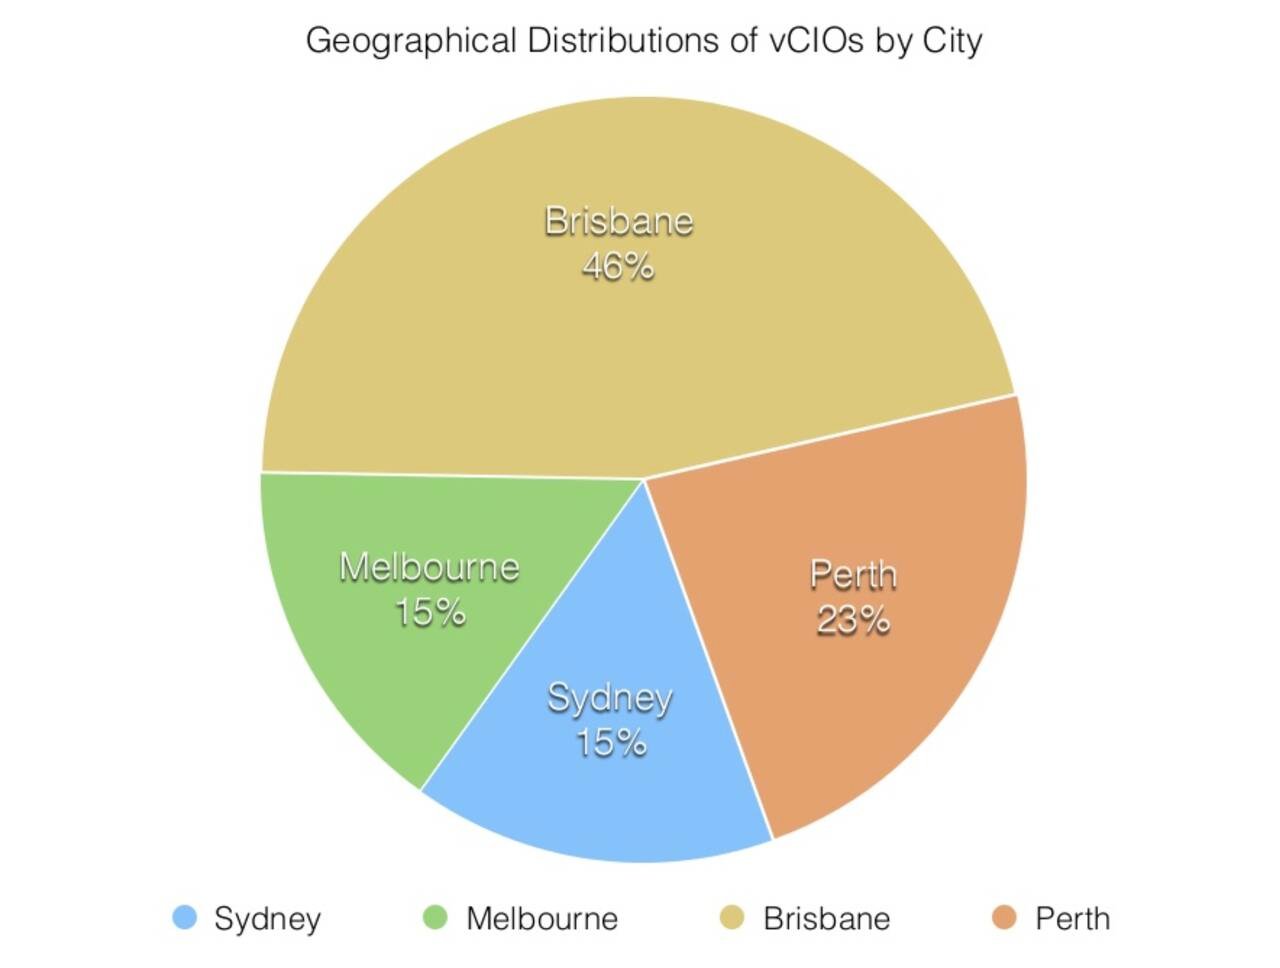 vCIOs by city in Australia